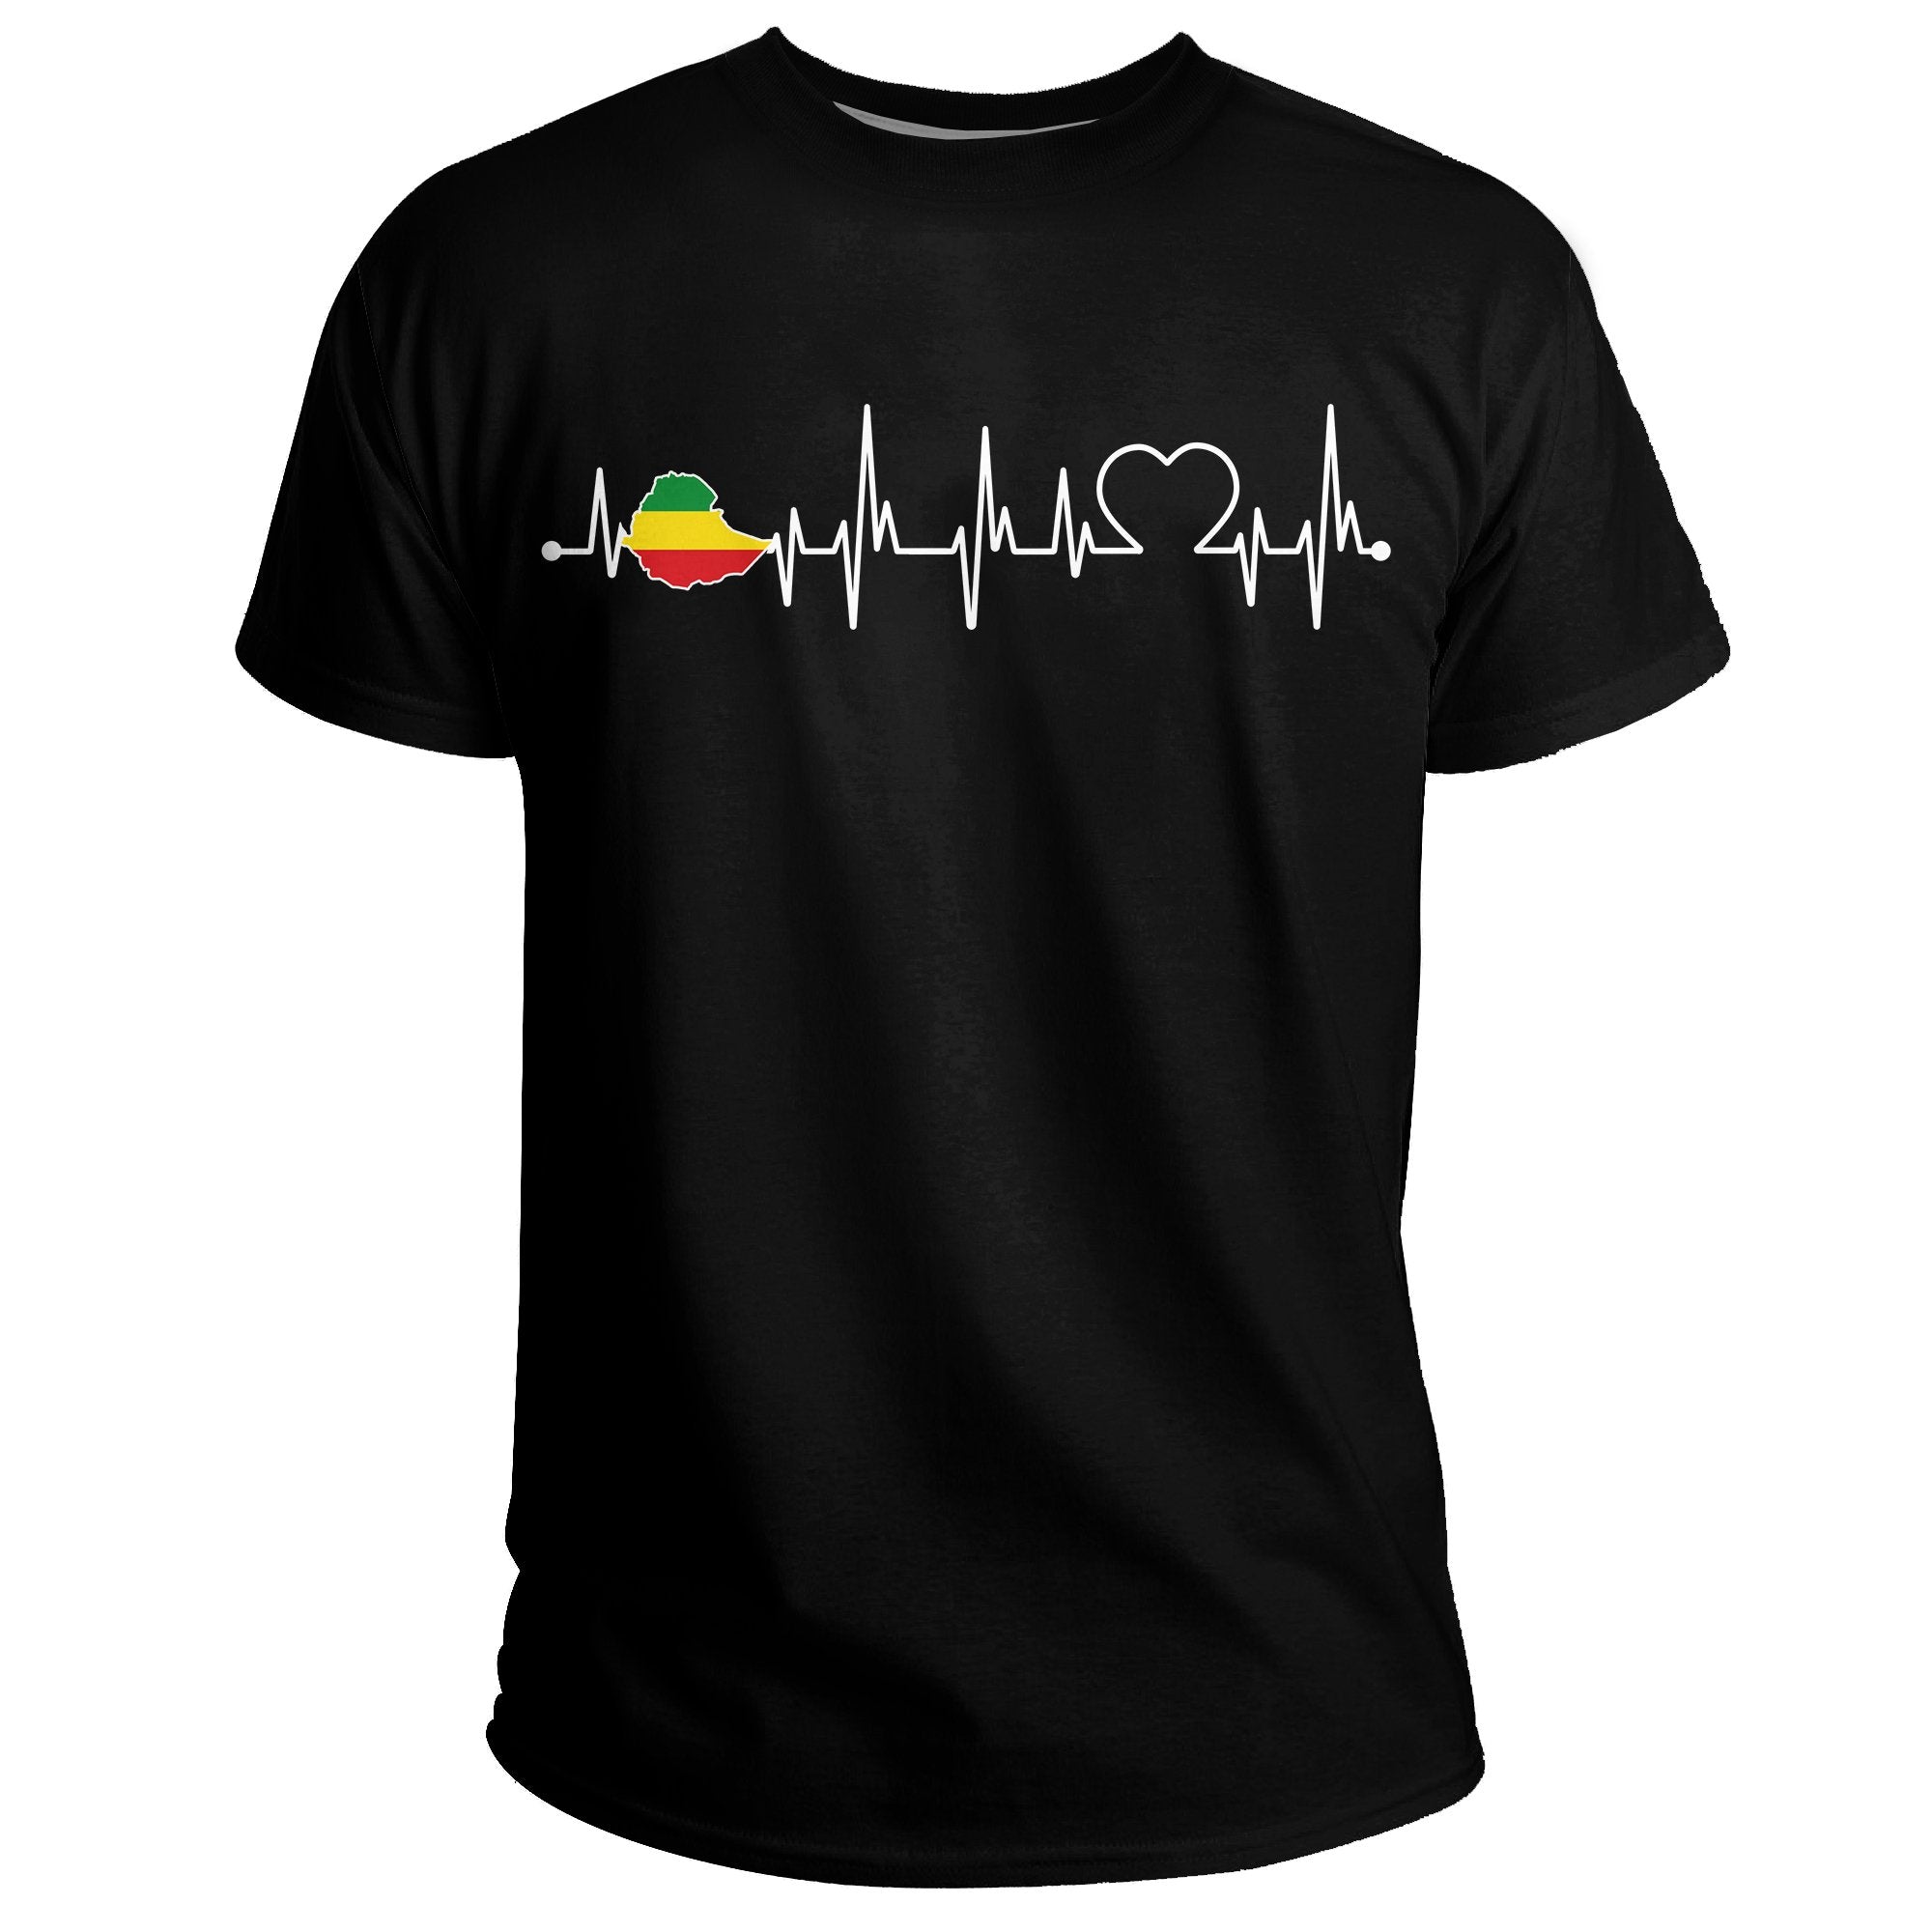 ethiopia-t-shirt-heartbeat